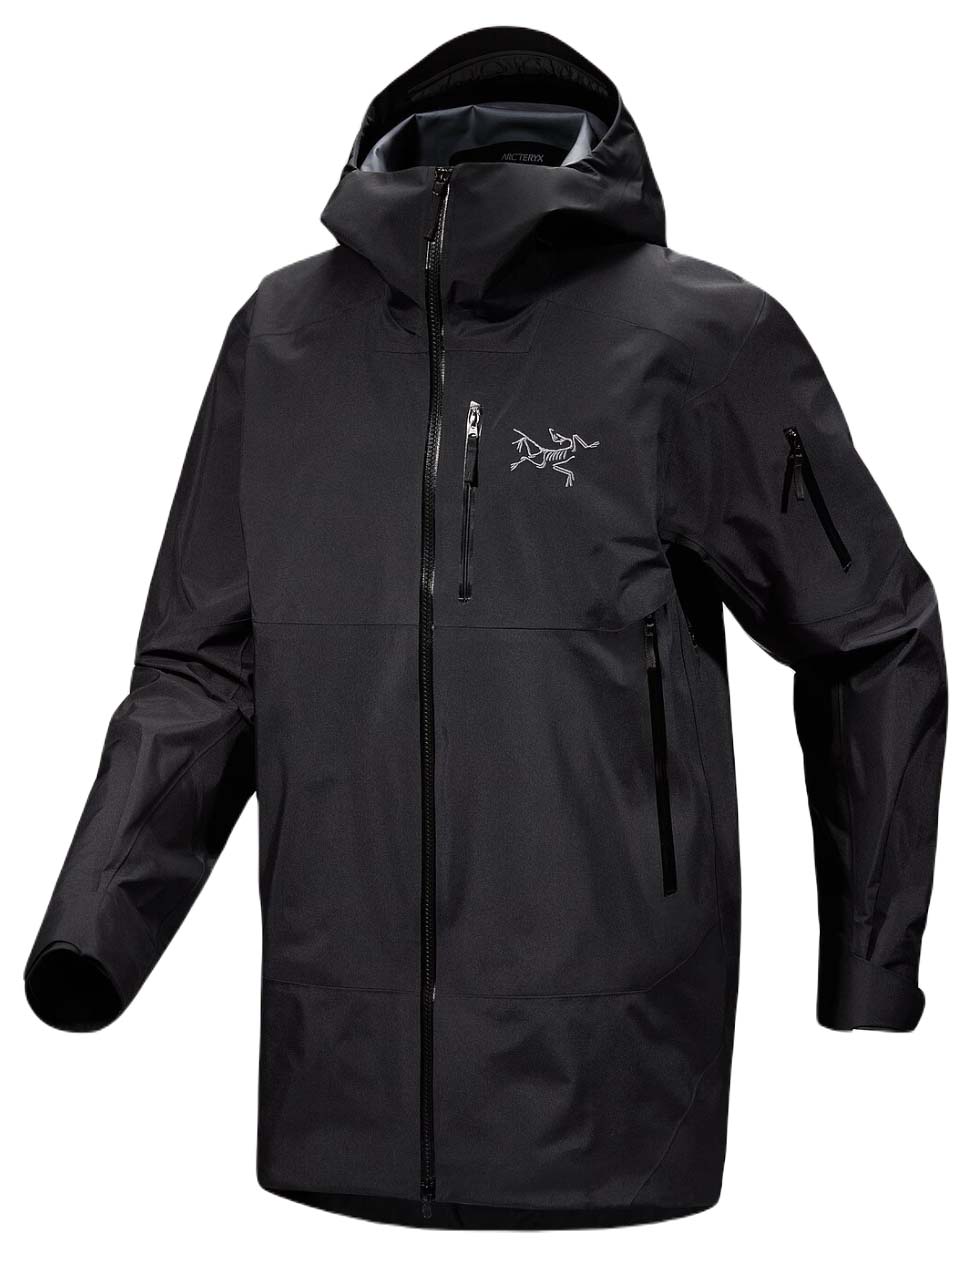 Arc'teryx Sabre SV ski jacket